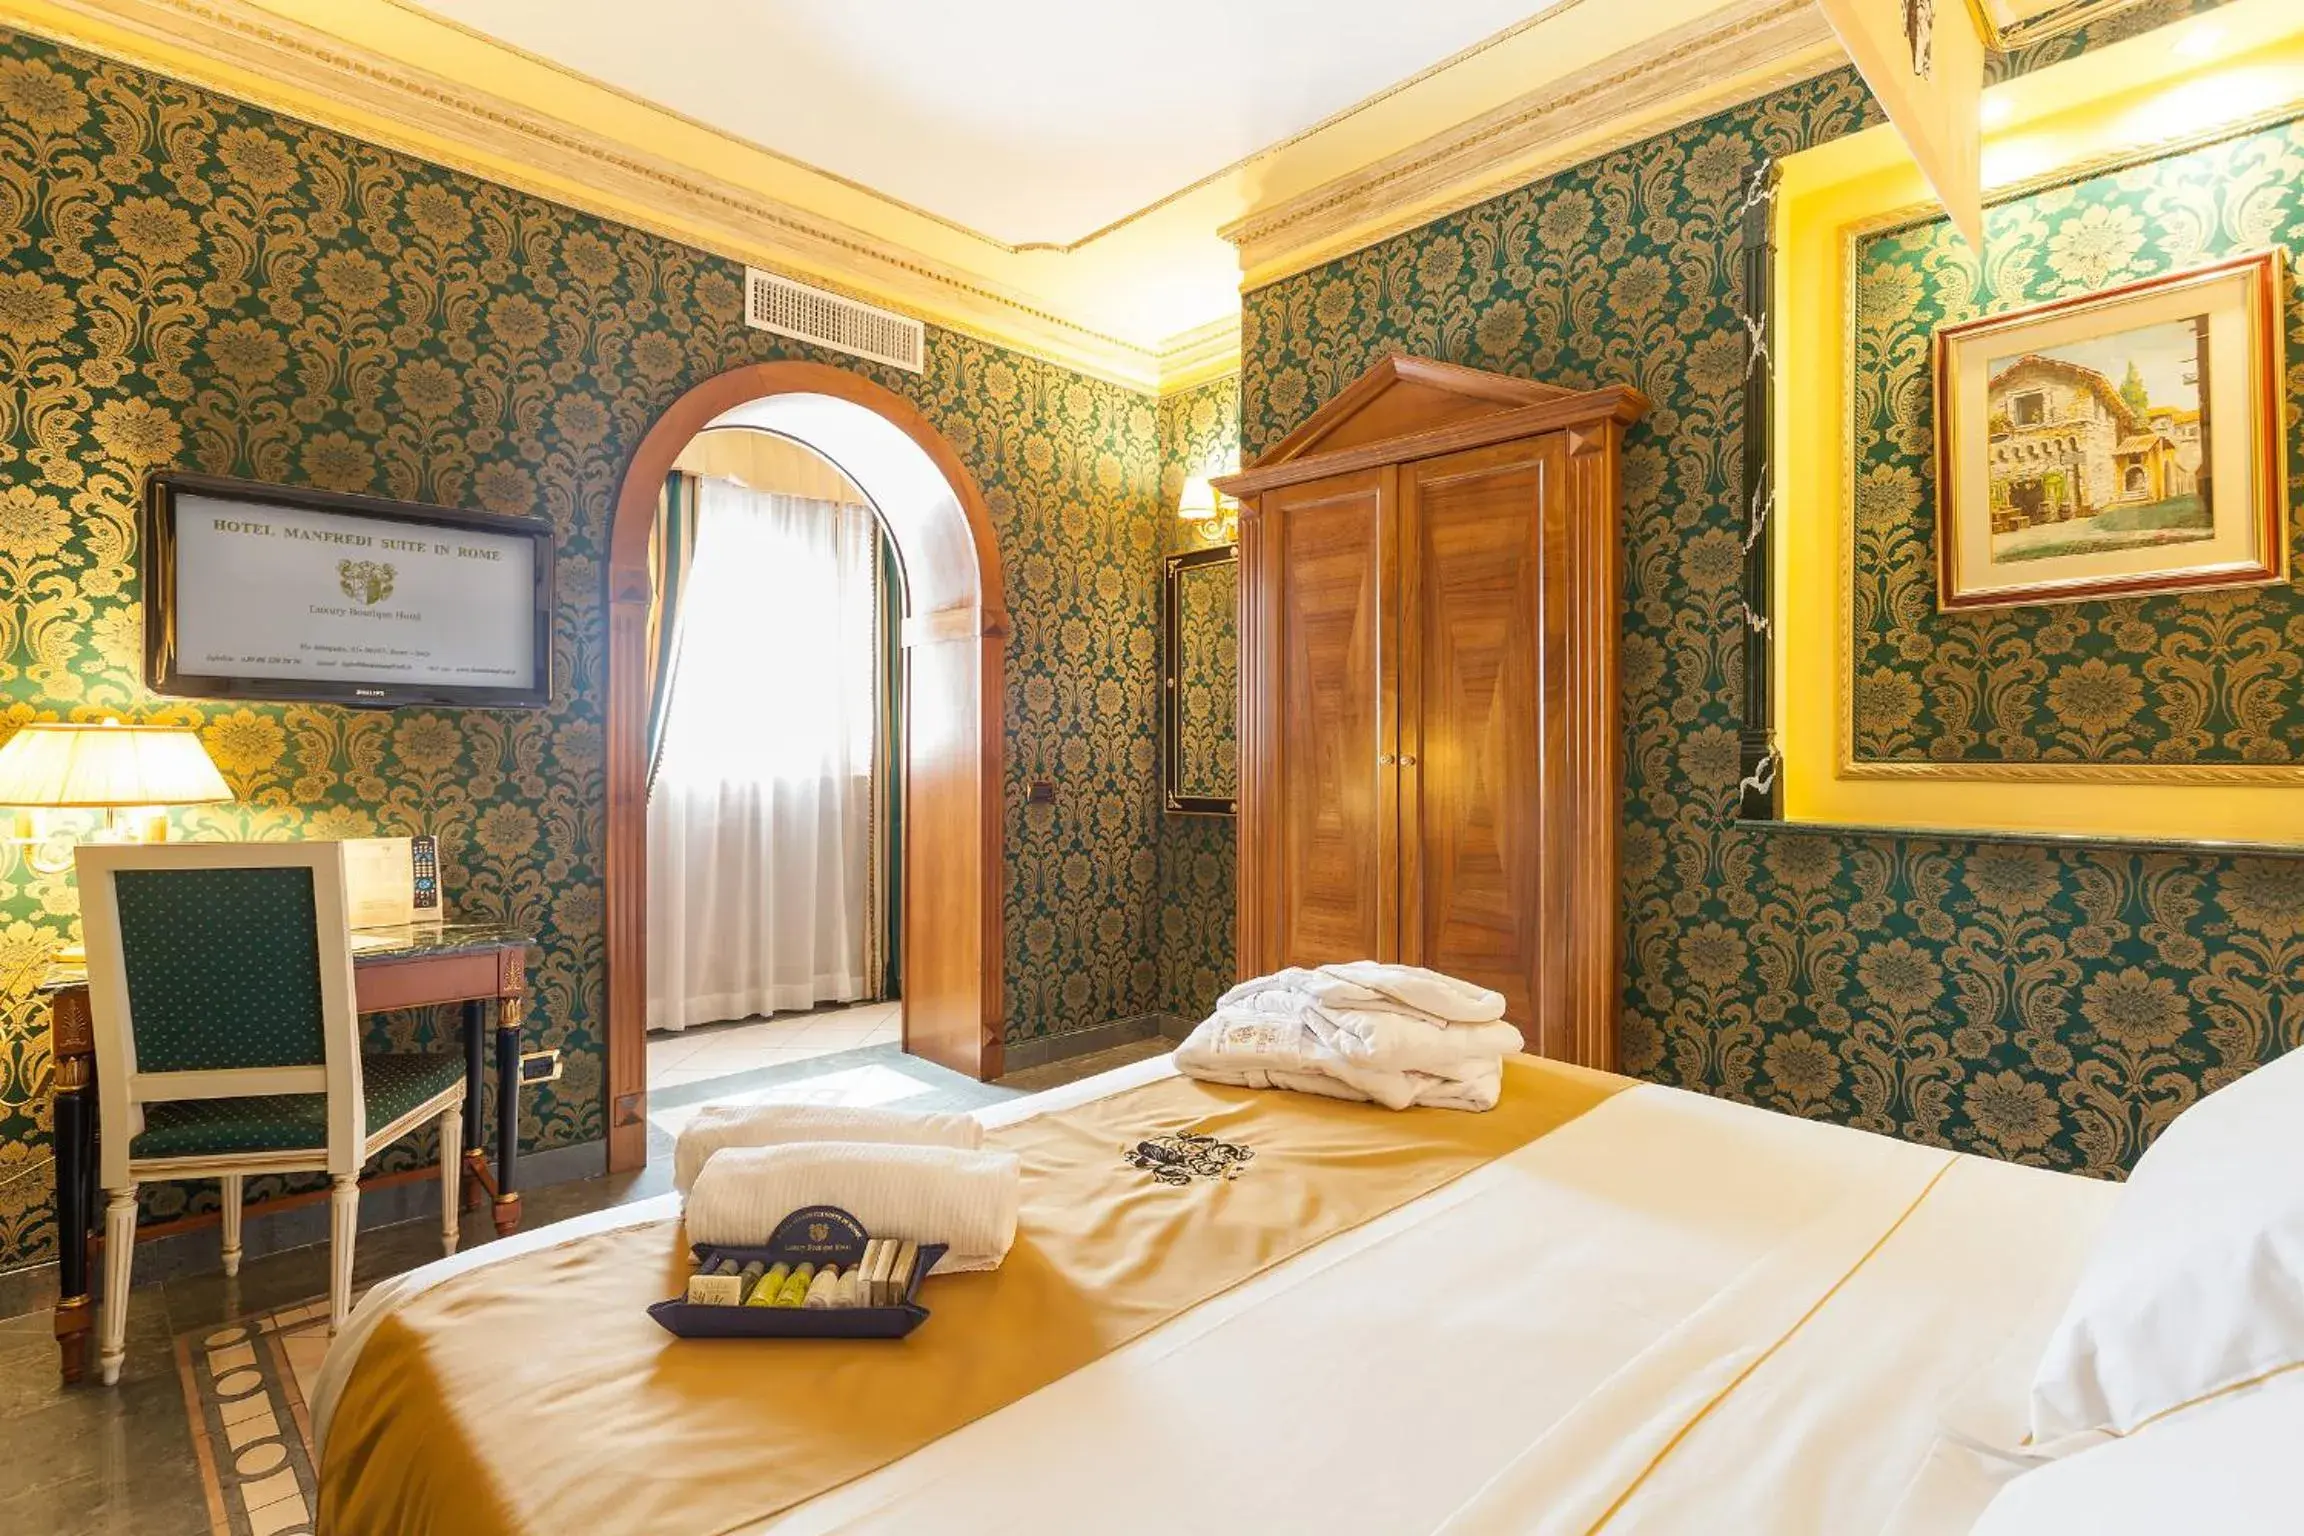 Bed in Hotel Manfredi Suite In Rome